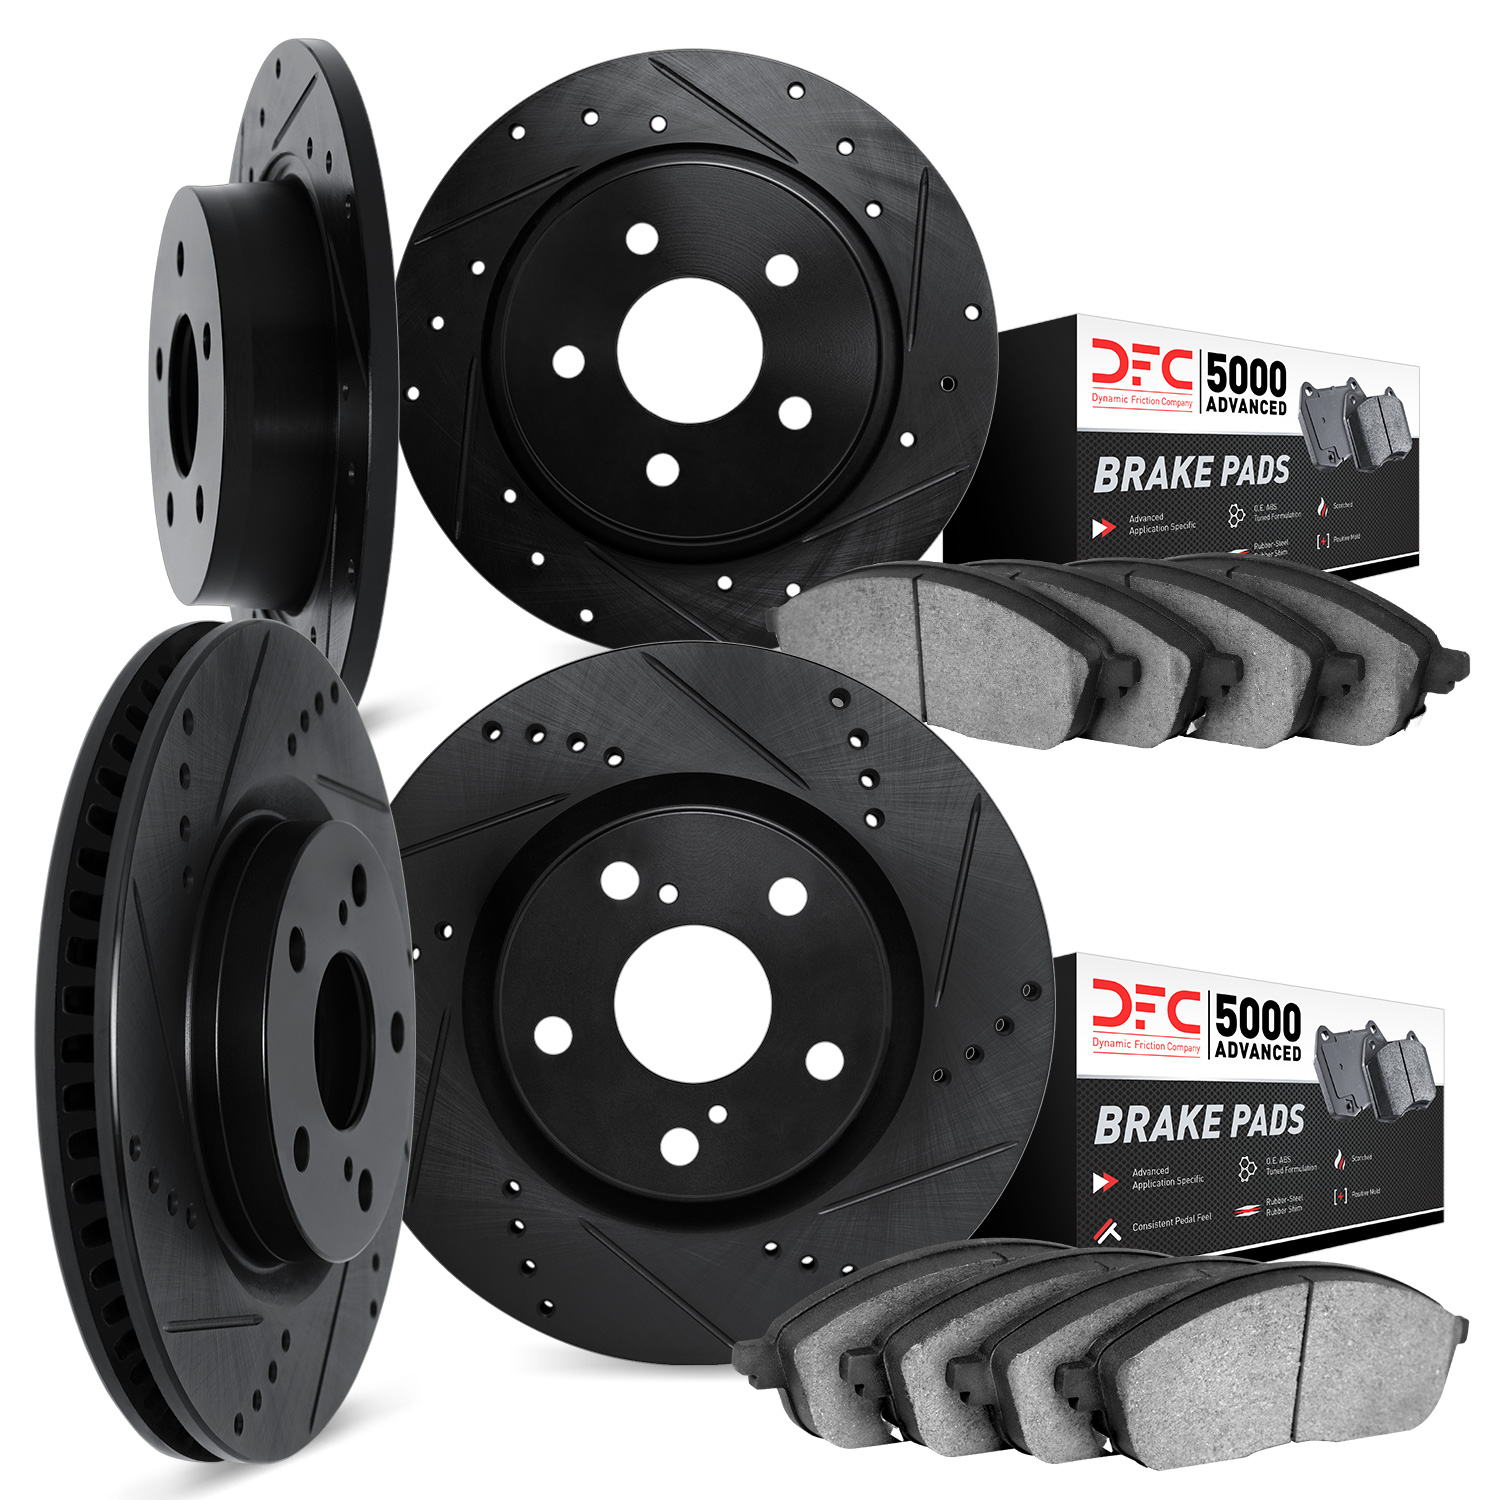 8504-54390 Drilled/Slotted Brake Rotors w/5000 Advanced Brake Pads Kit [Black], 2015-2019 Ford/Lincoln/Mercury/Mazda, Position: